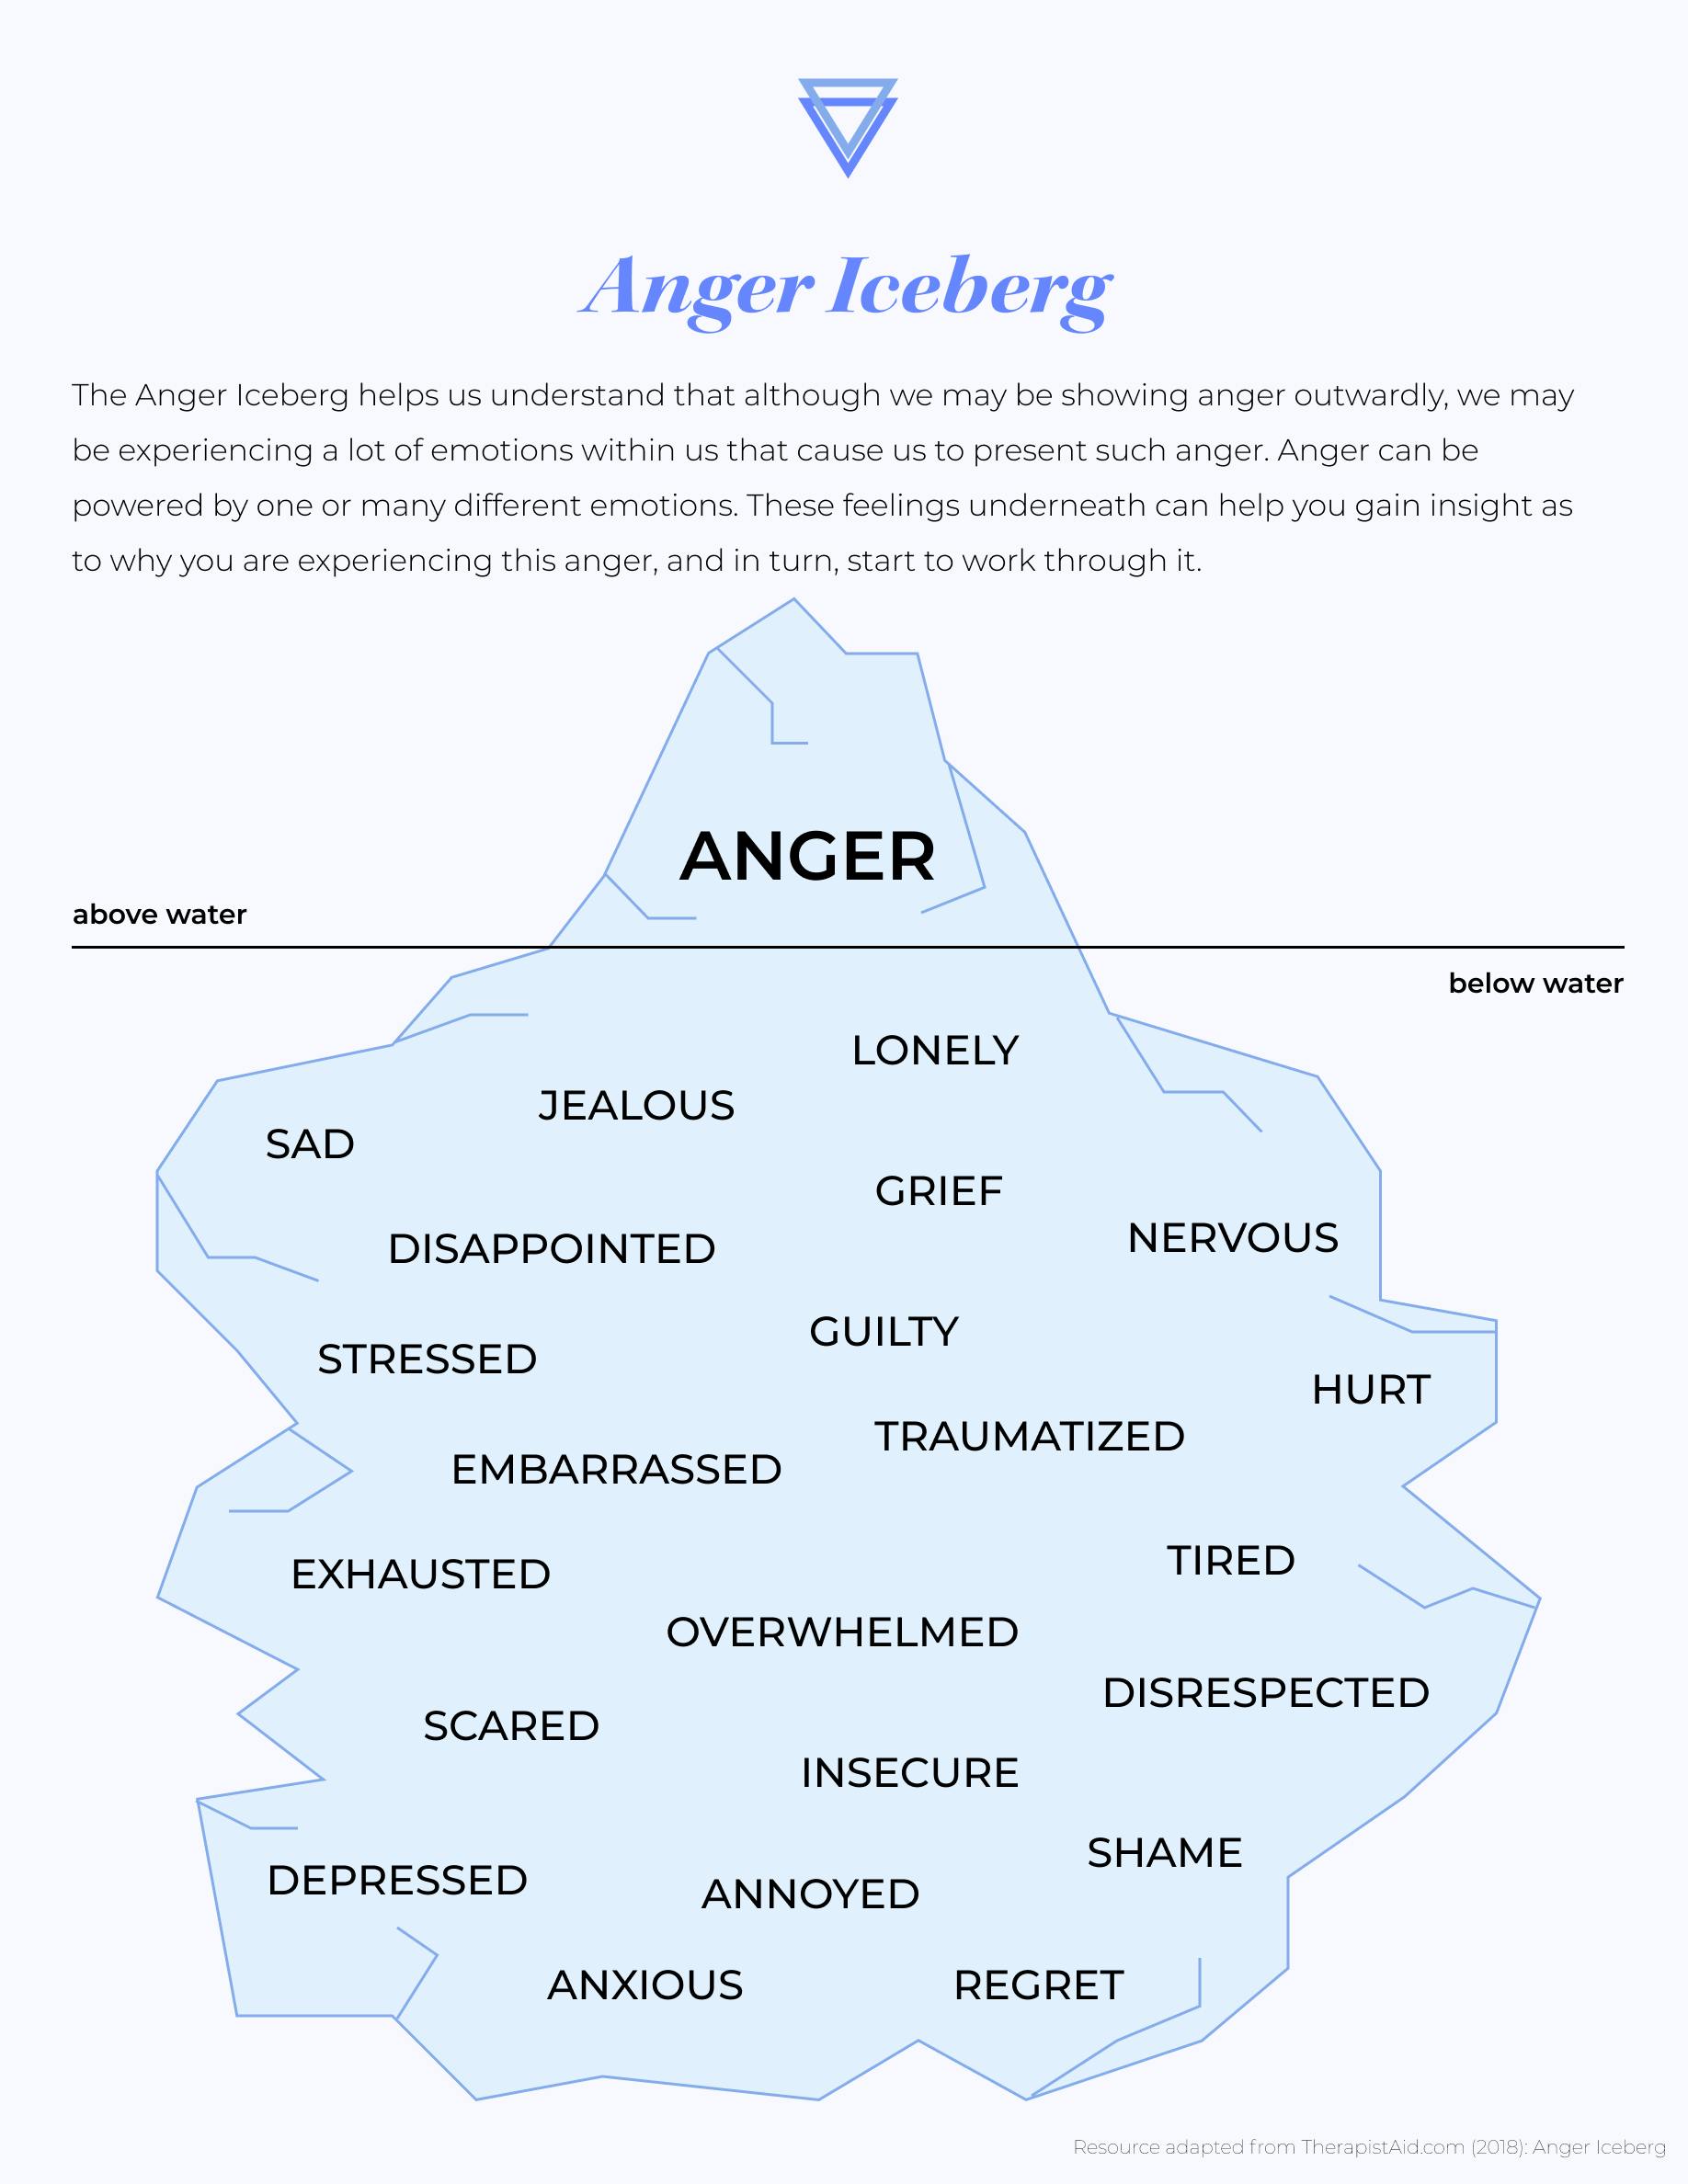 Anger Iceberg Image